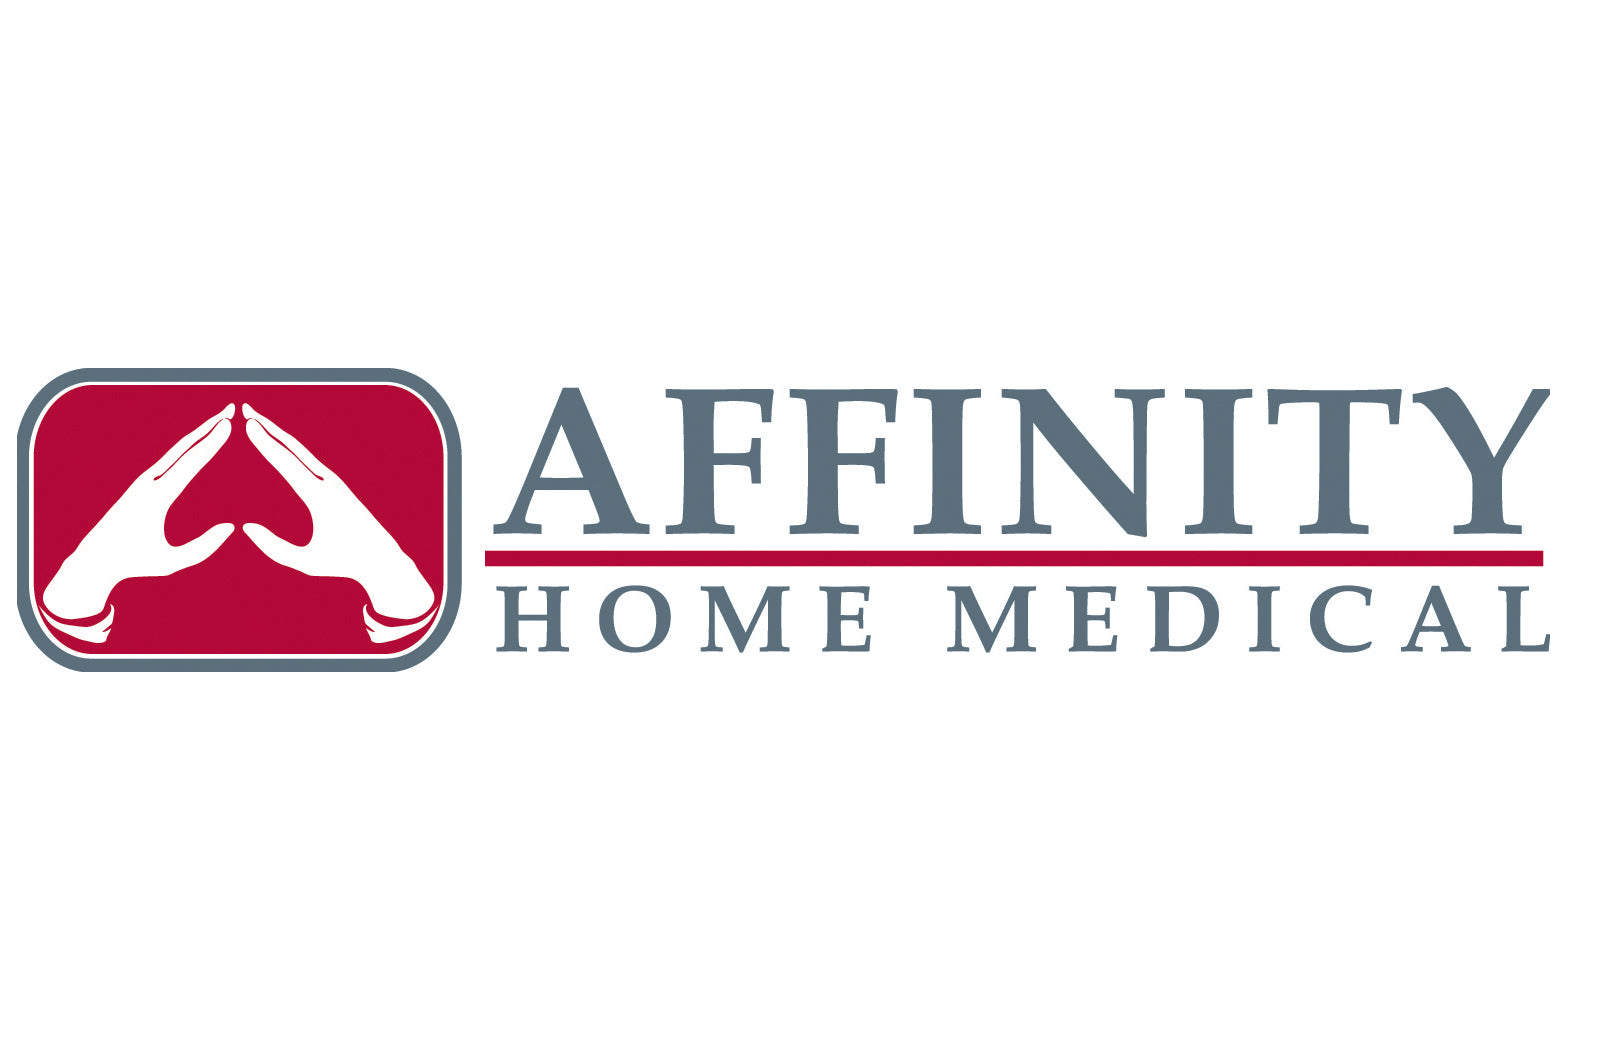 Affinity Home Medical